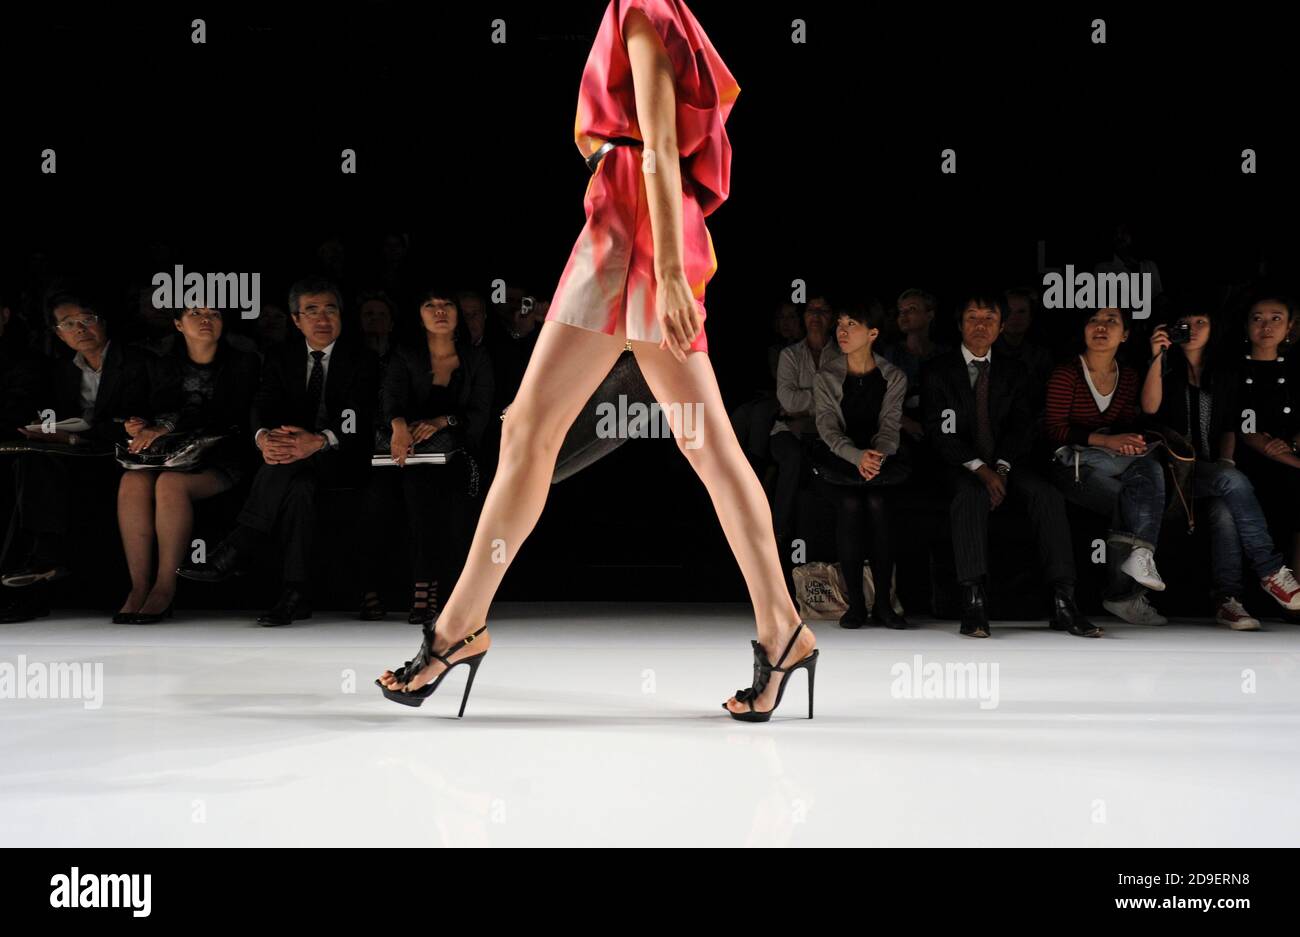 Model catwalk during the Fashion week in Milan. Stock Photo